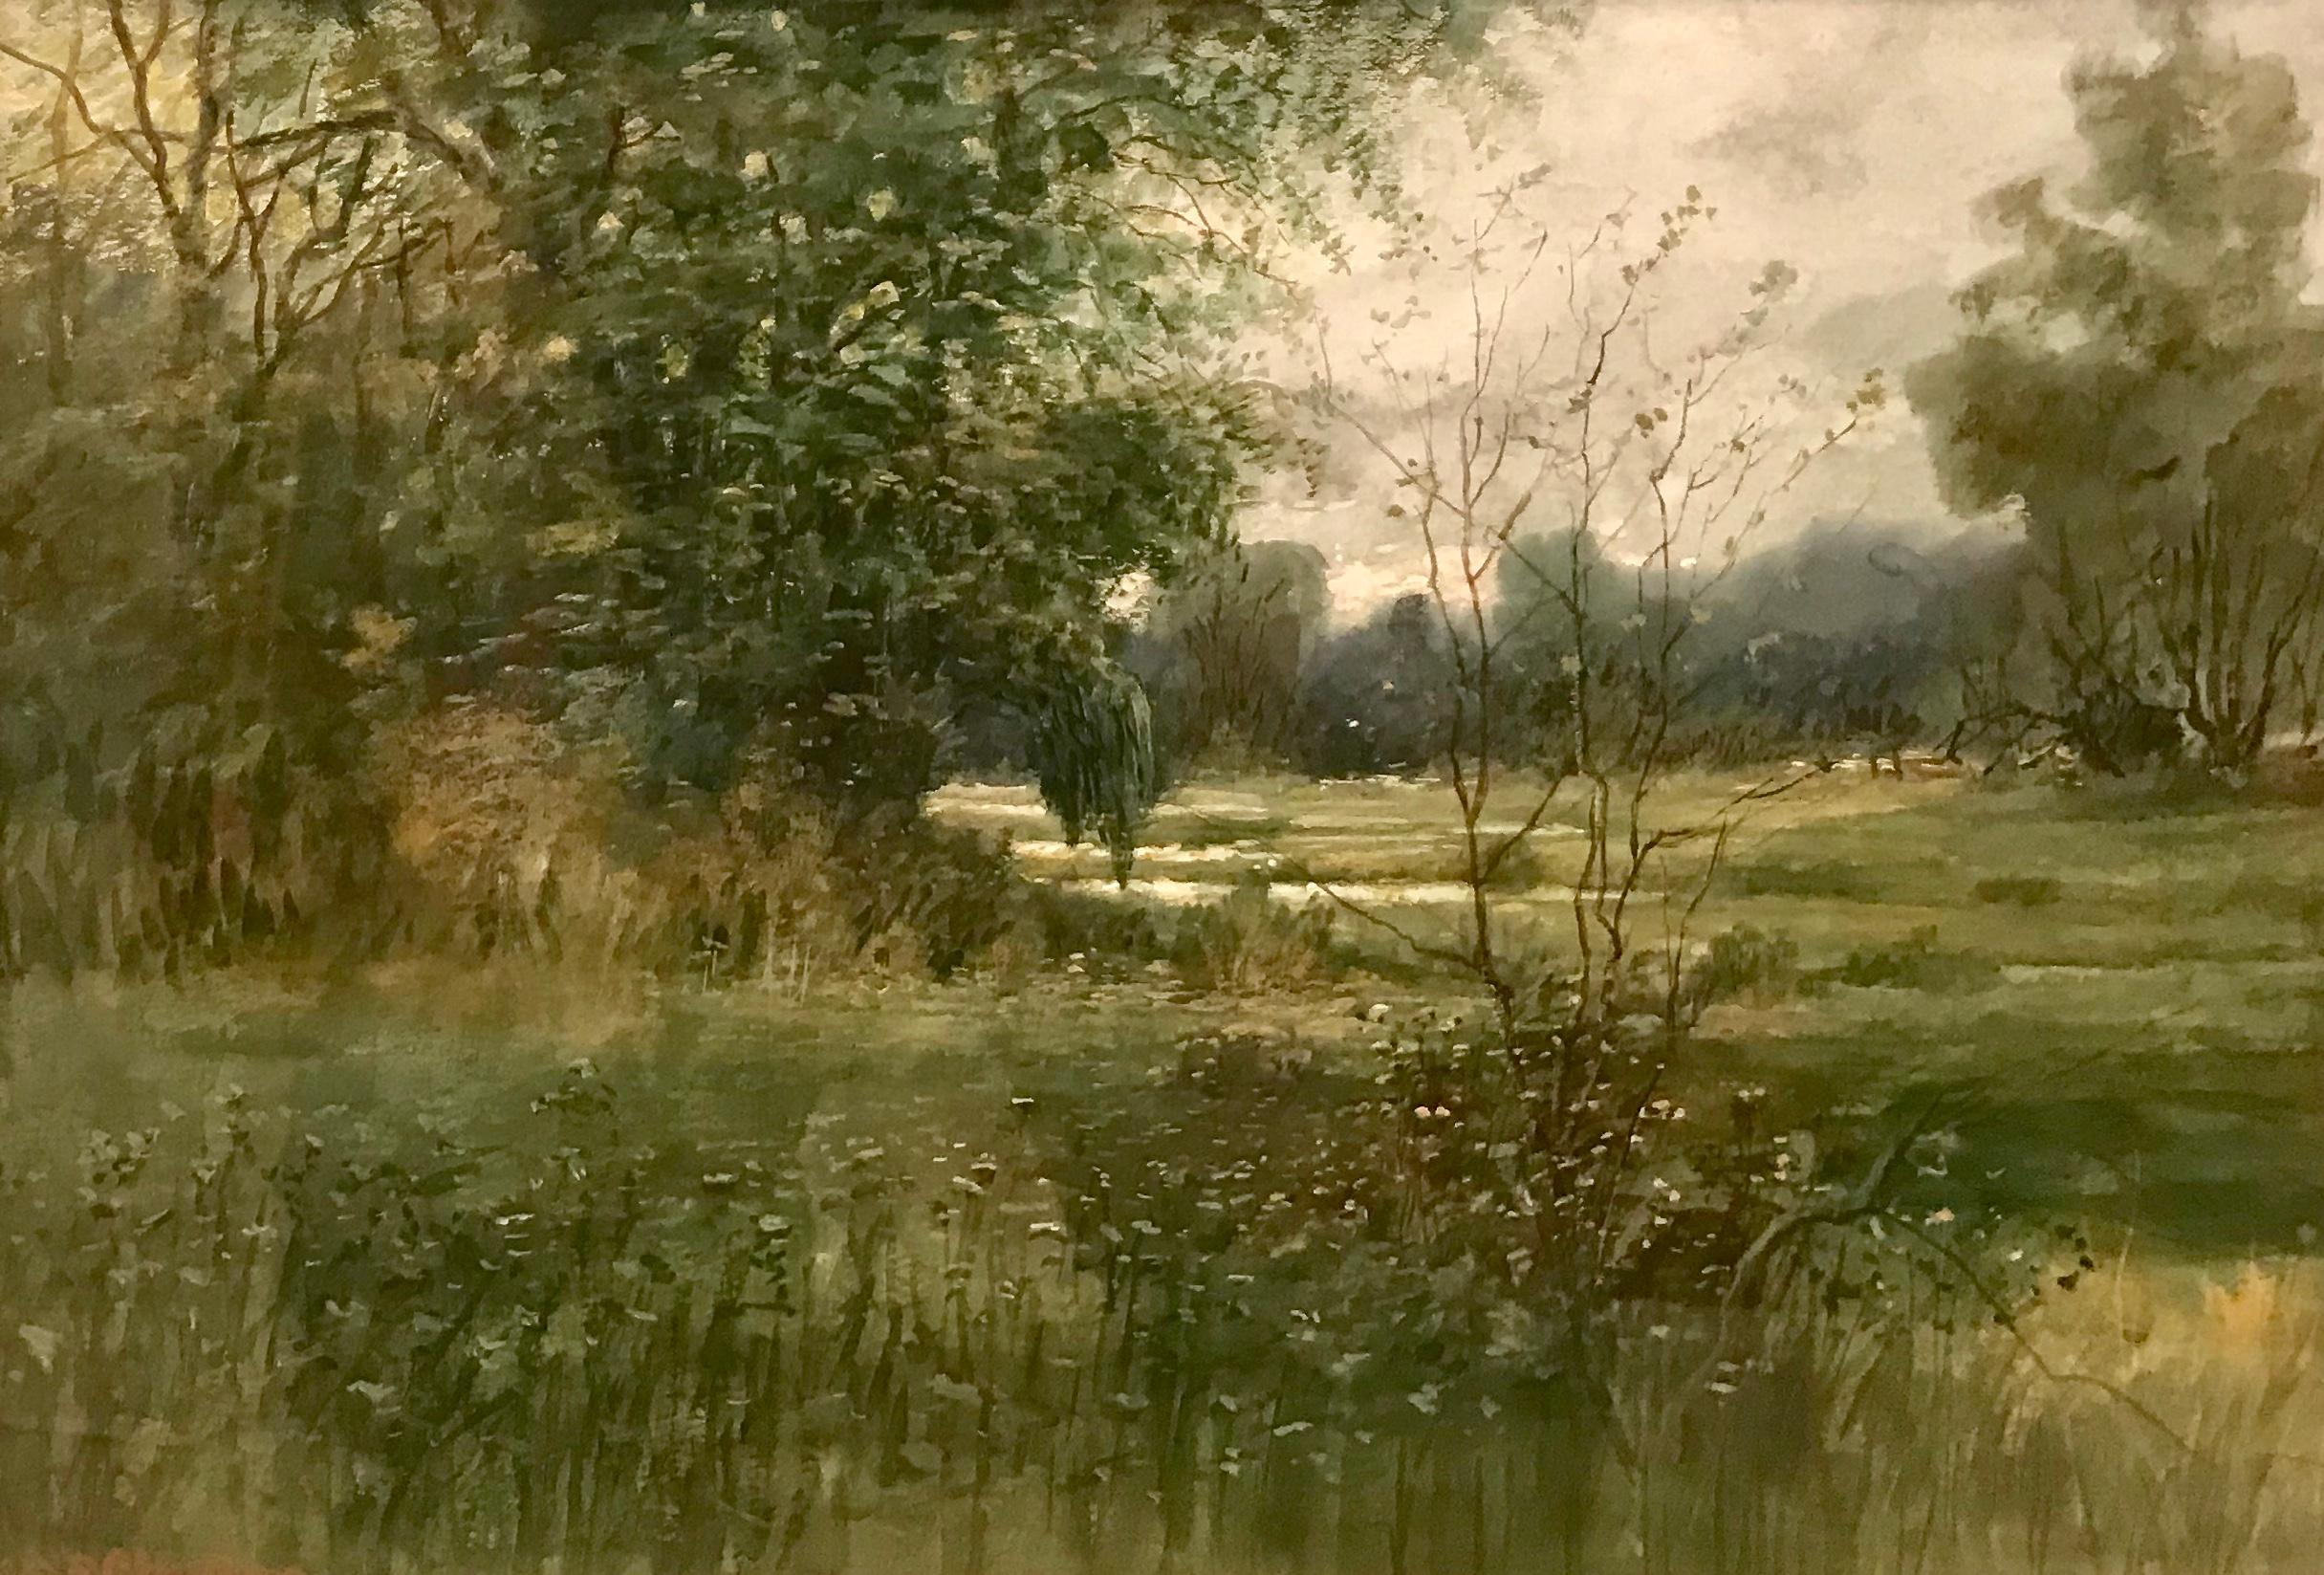 Samuel R. Chaffee Landscape Art - “Pond View”